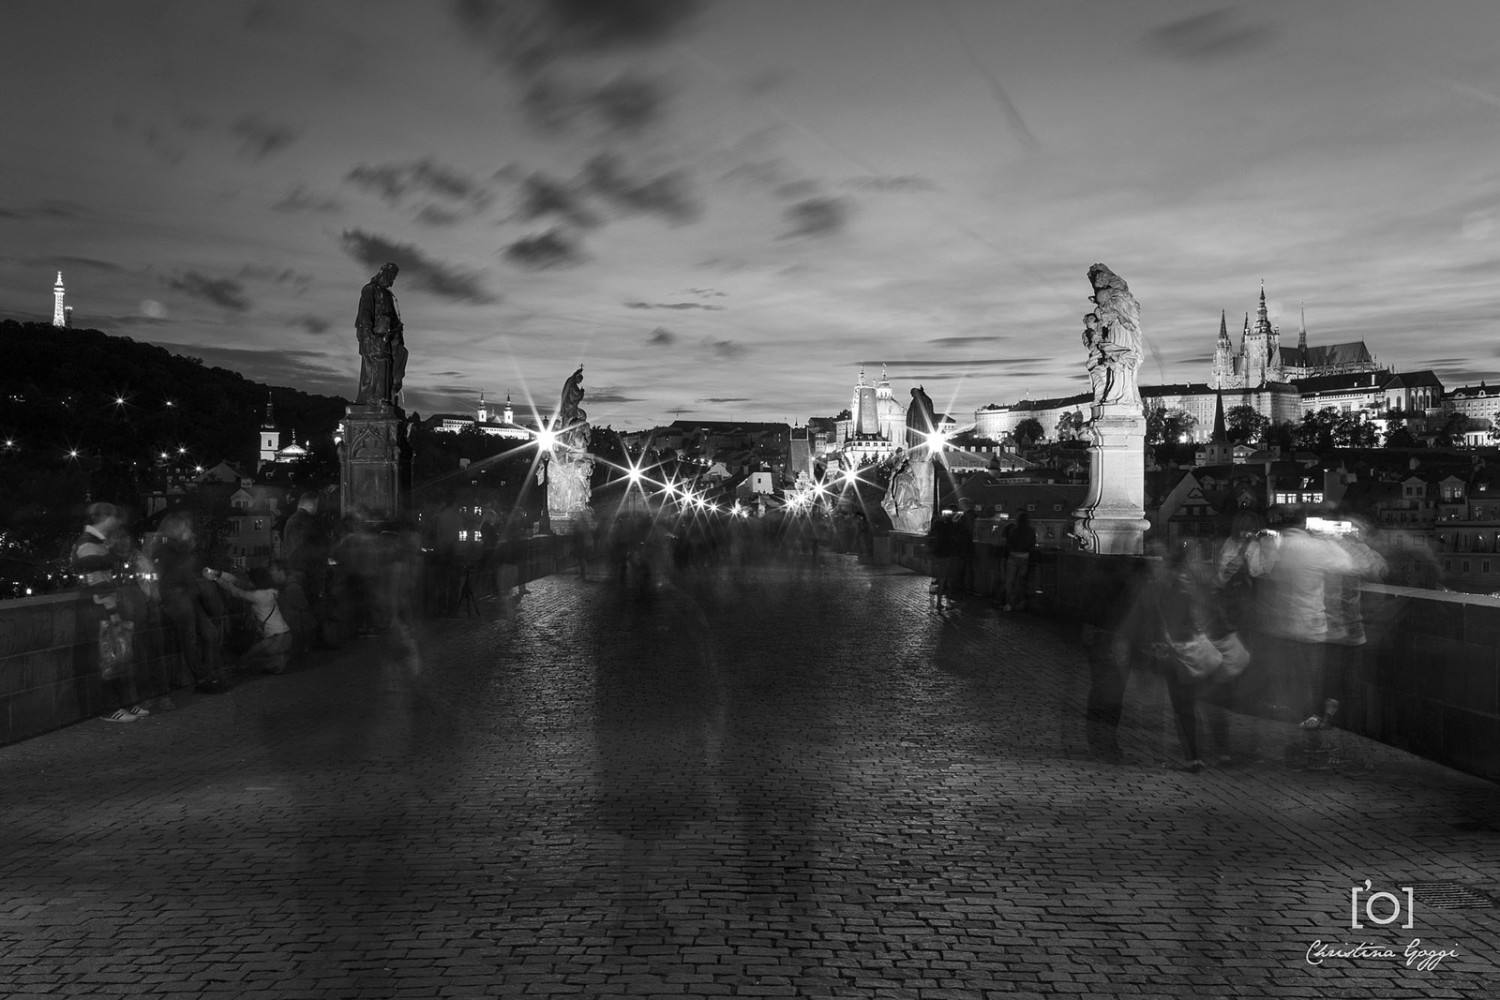 Tutorial: Capturing the Spectral Effect on Prague's Iconic Bridge